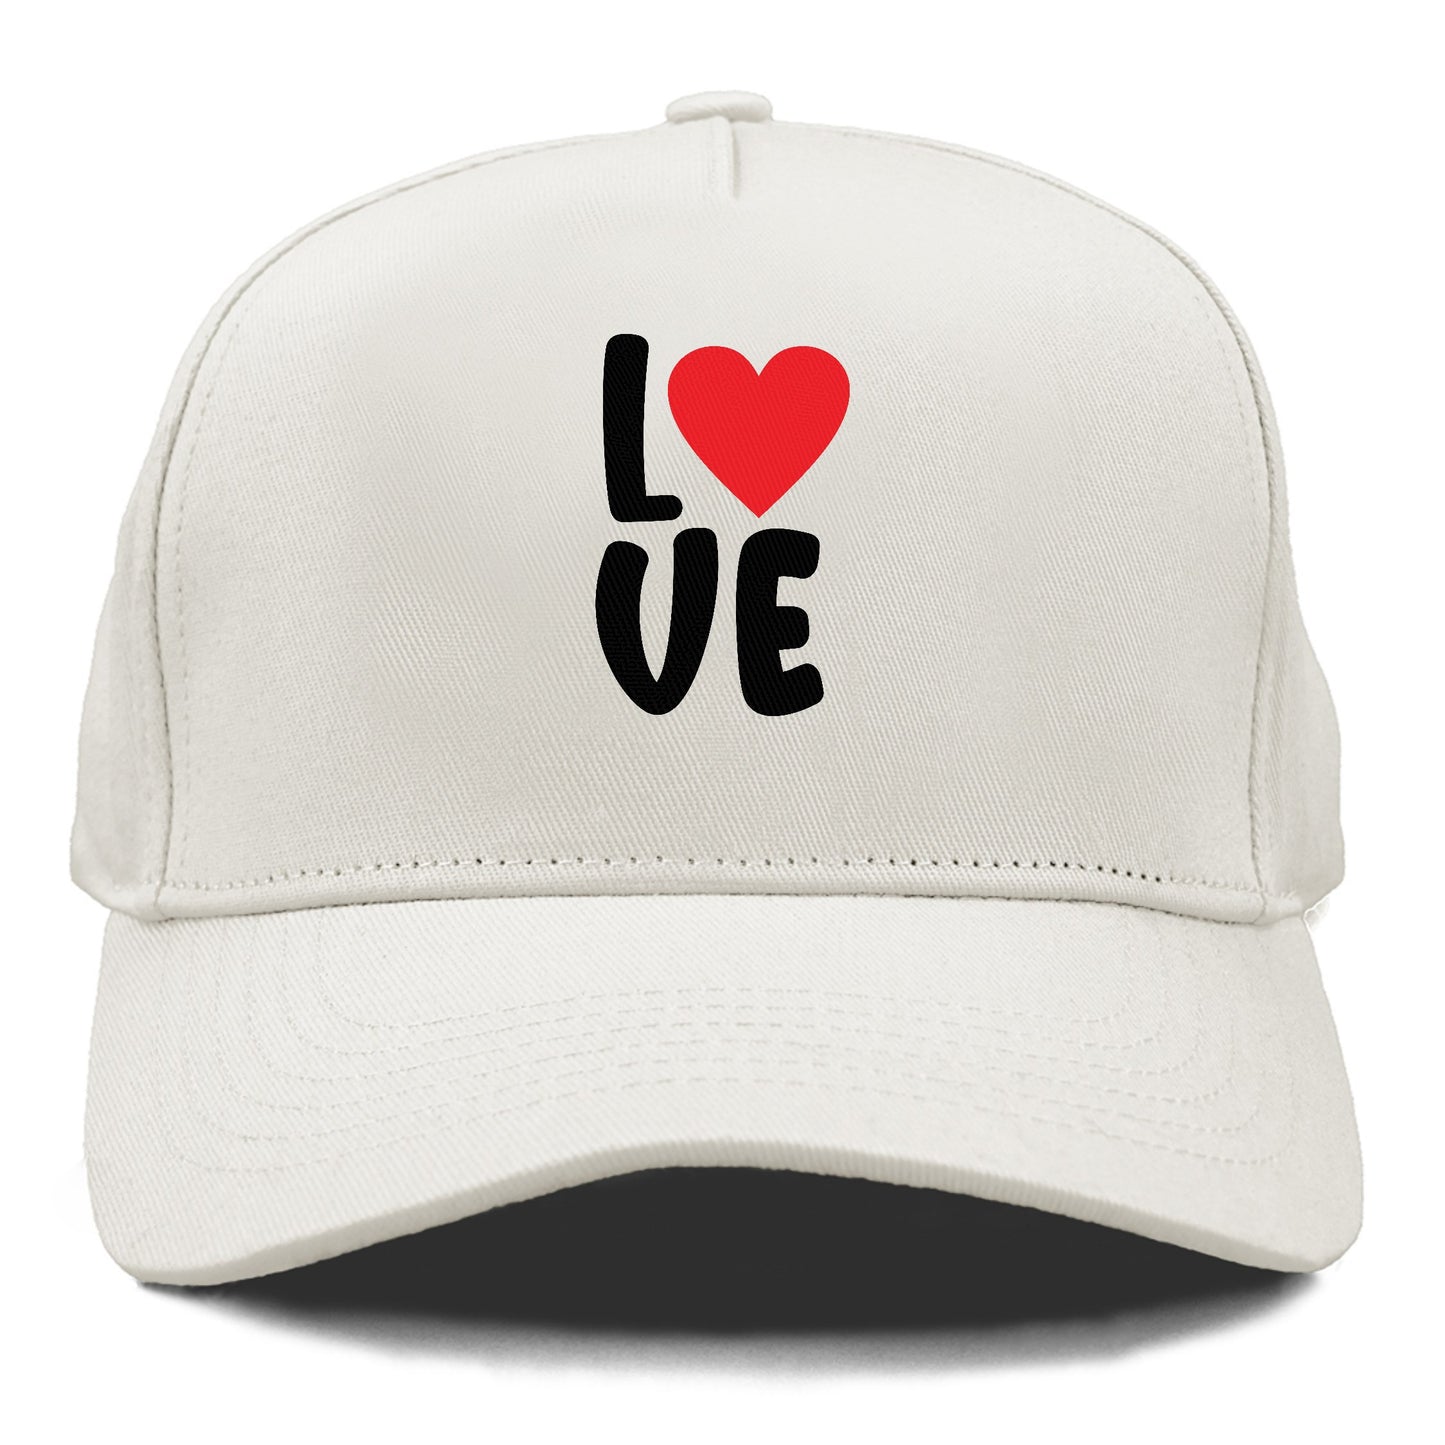 love 2 Hat